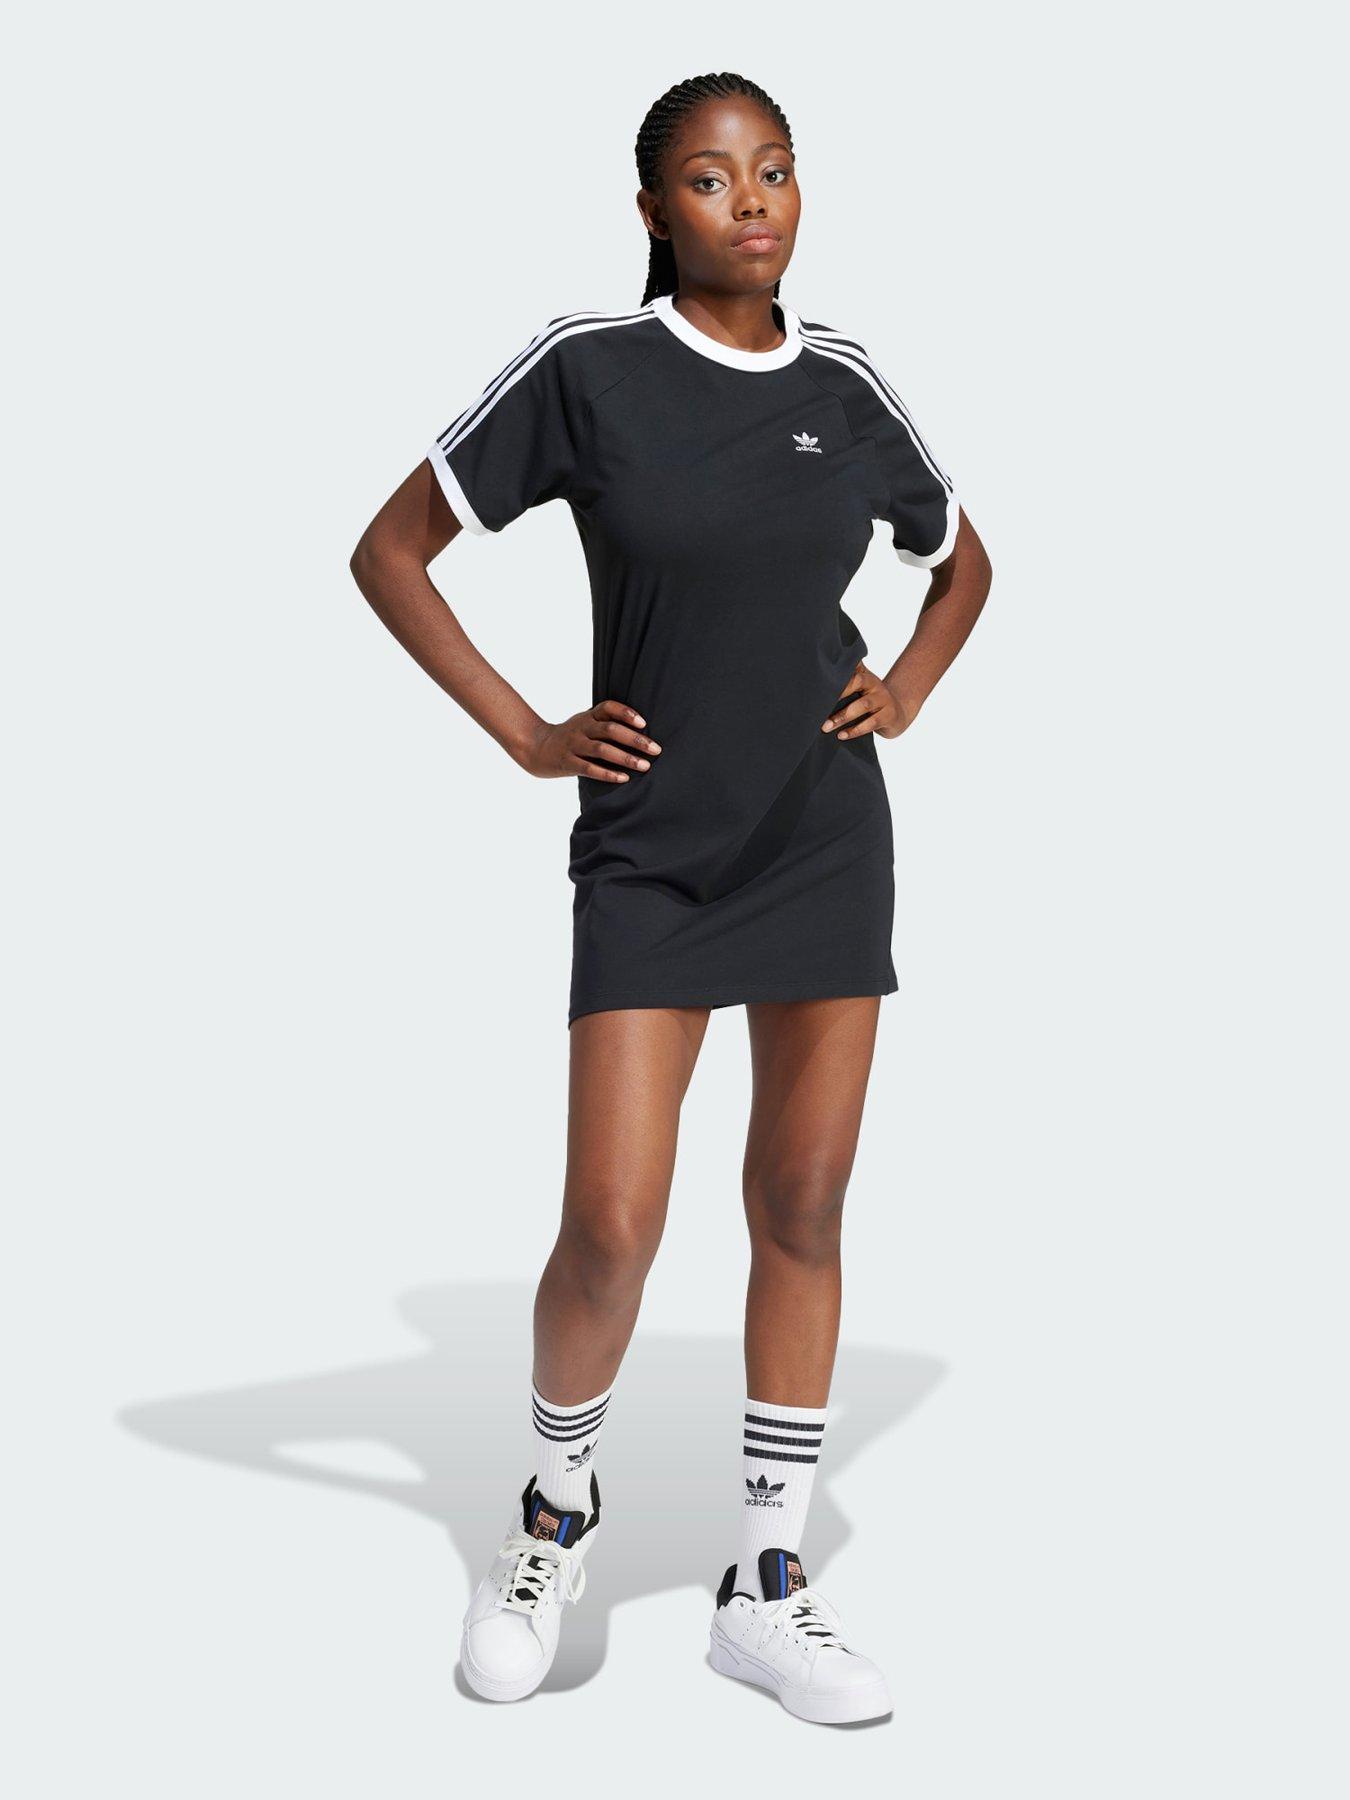 https://media.very.co.uk/i/very/11DML_SQ1_0000000004_BLACK_MDf/adidas-originals-3-stripes-raglan-dress.jpg?$180x240_retinamobilex2$